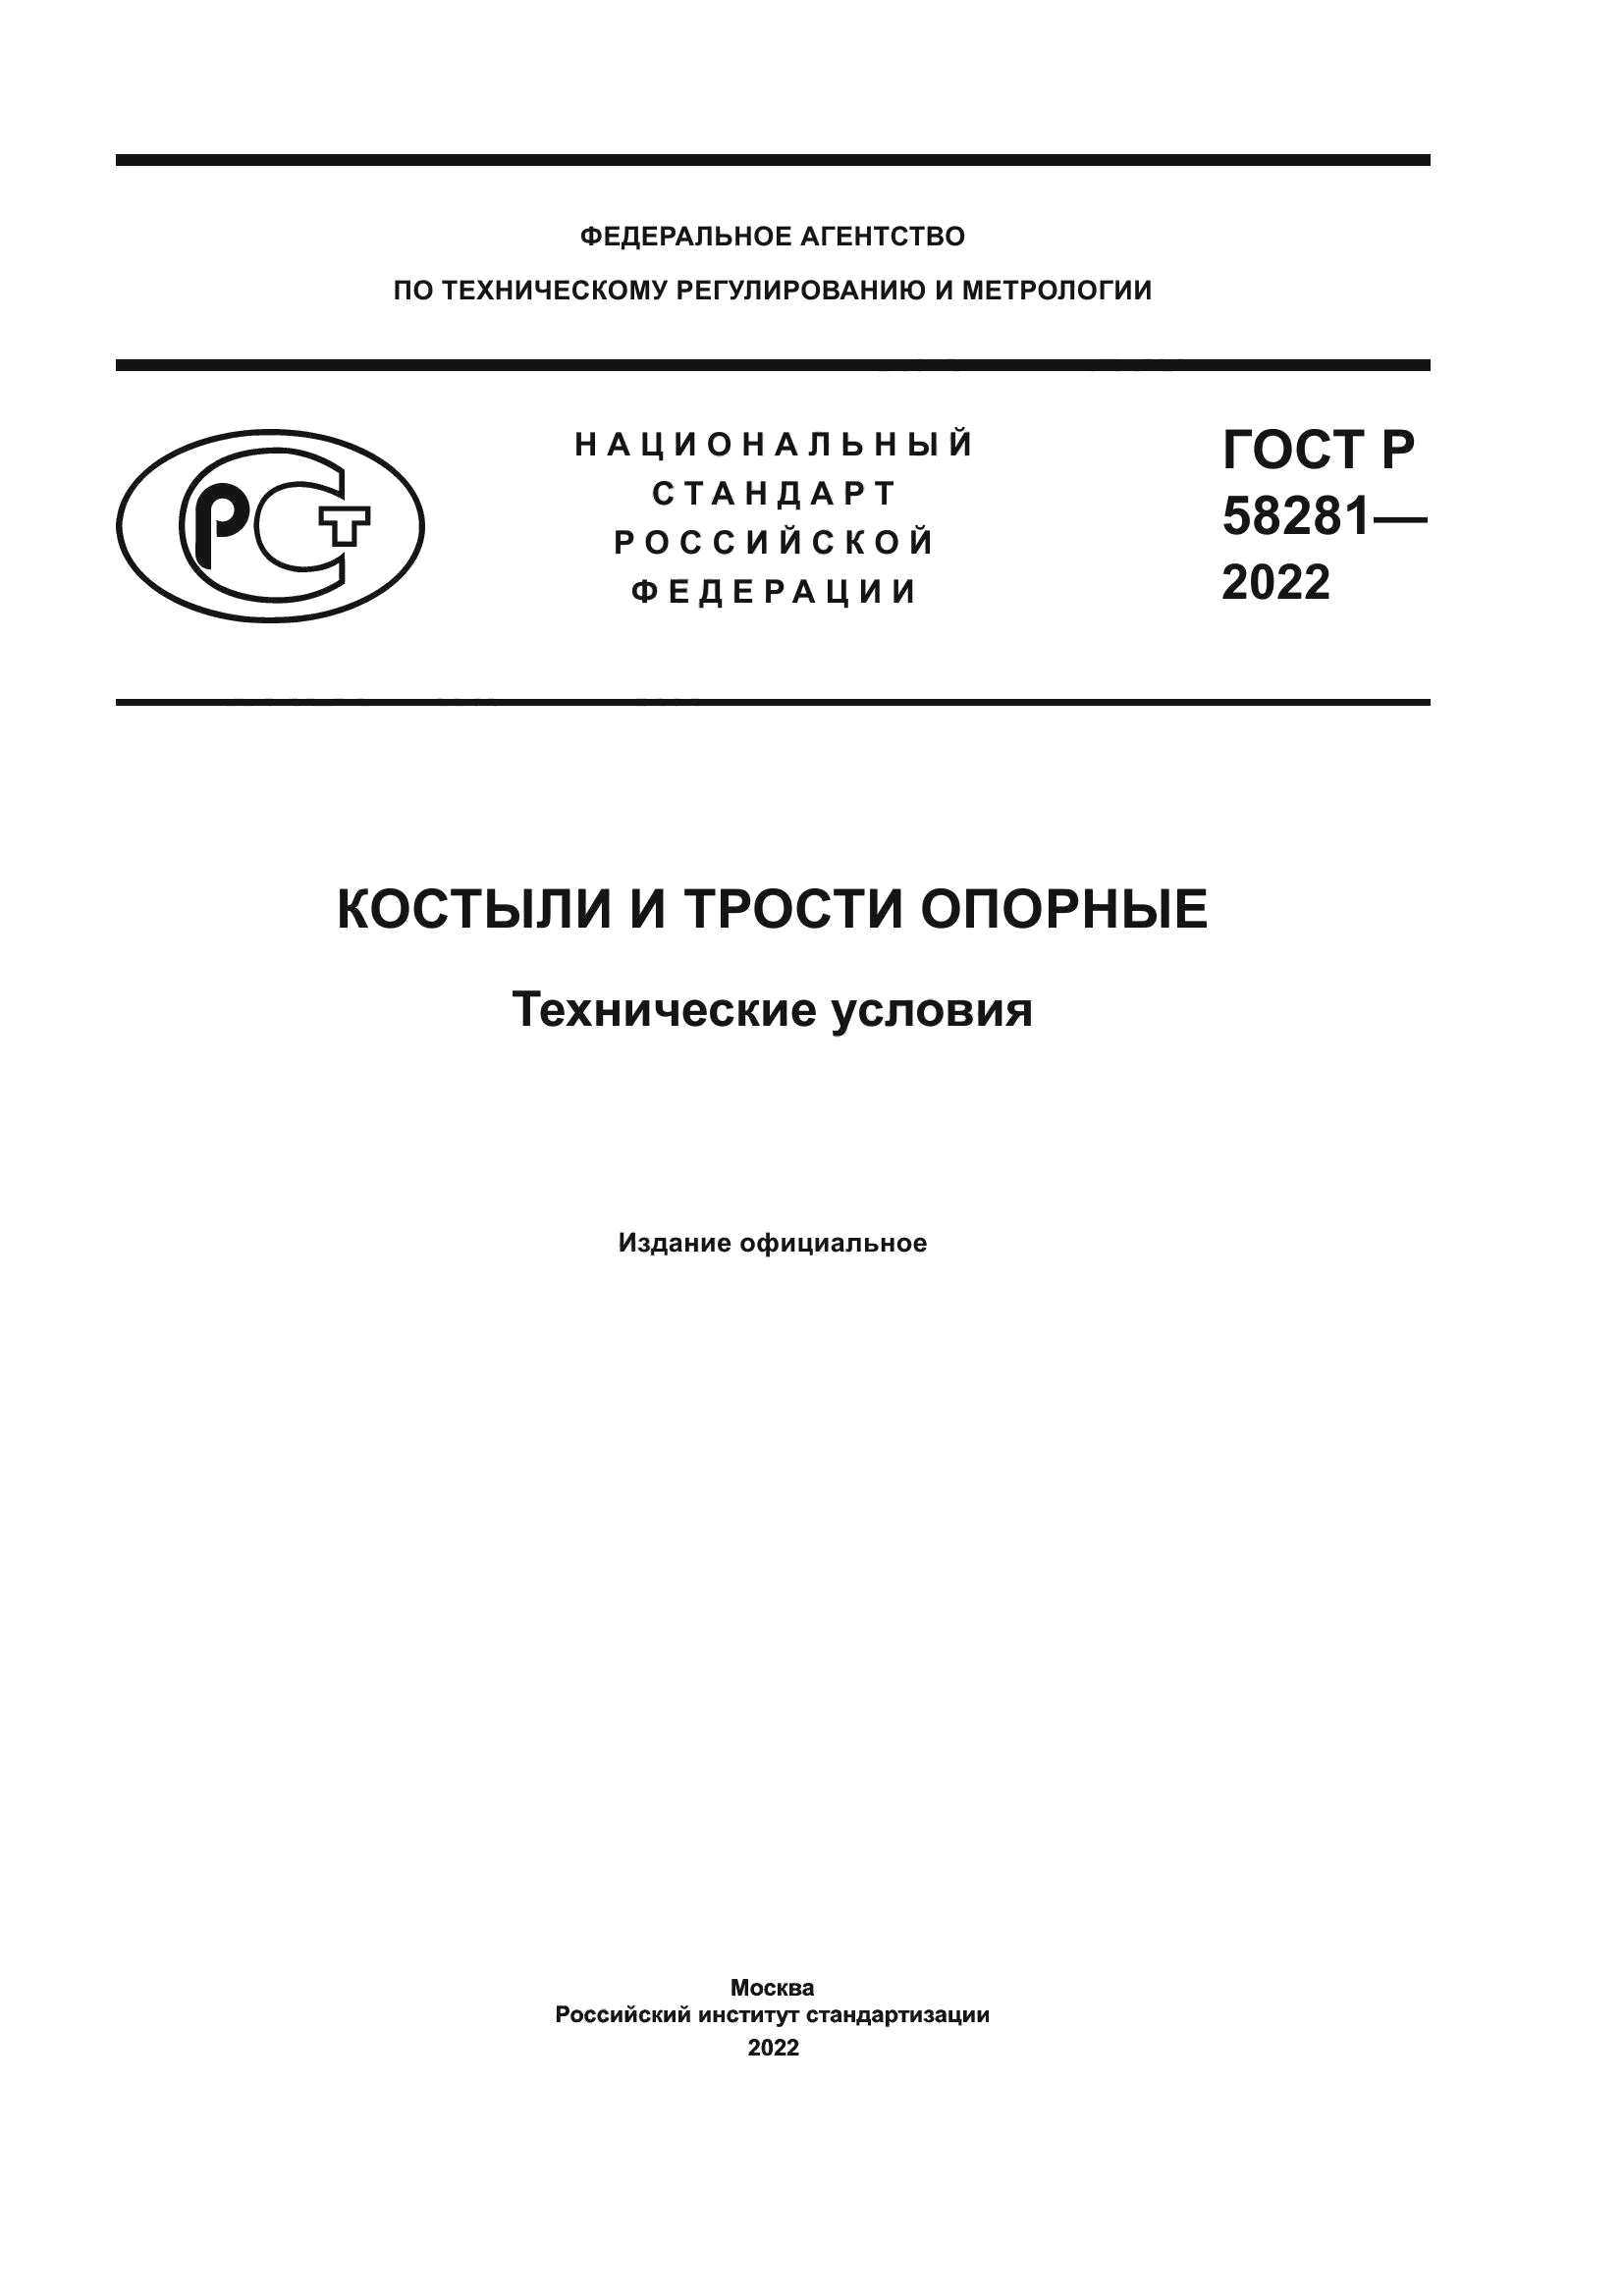 ГОСТ Р 58281-2022